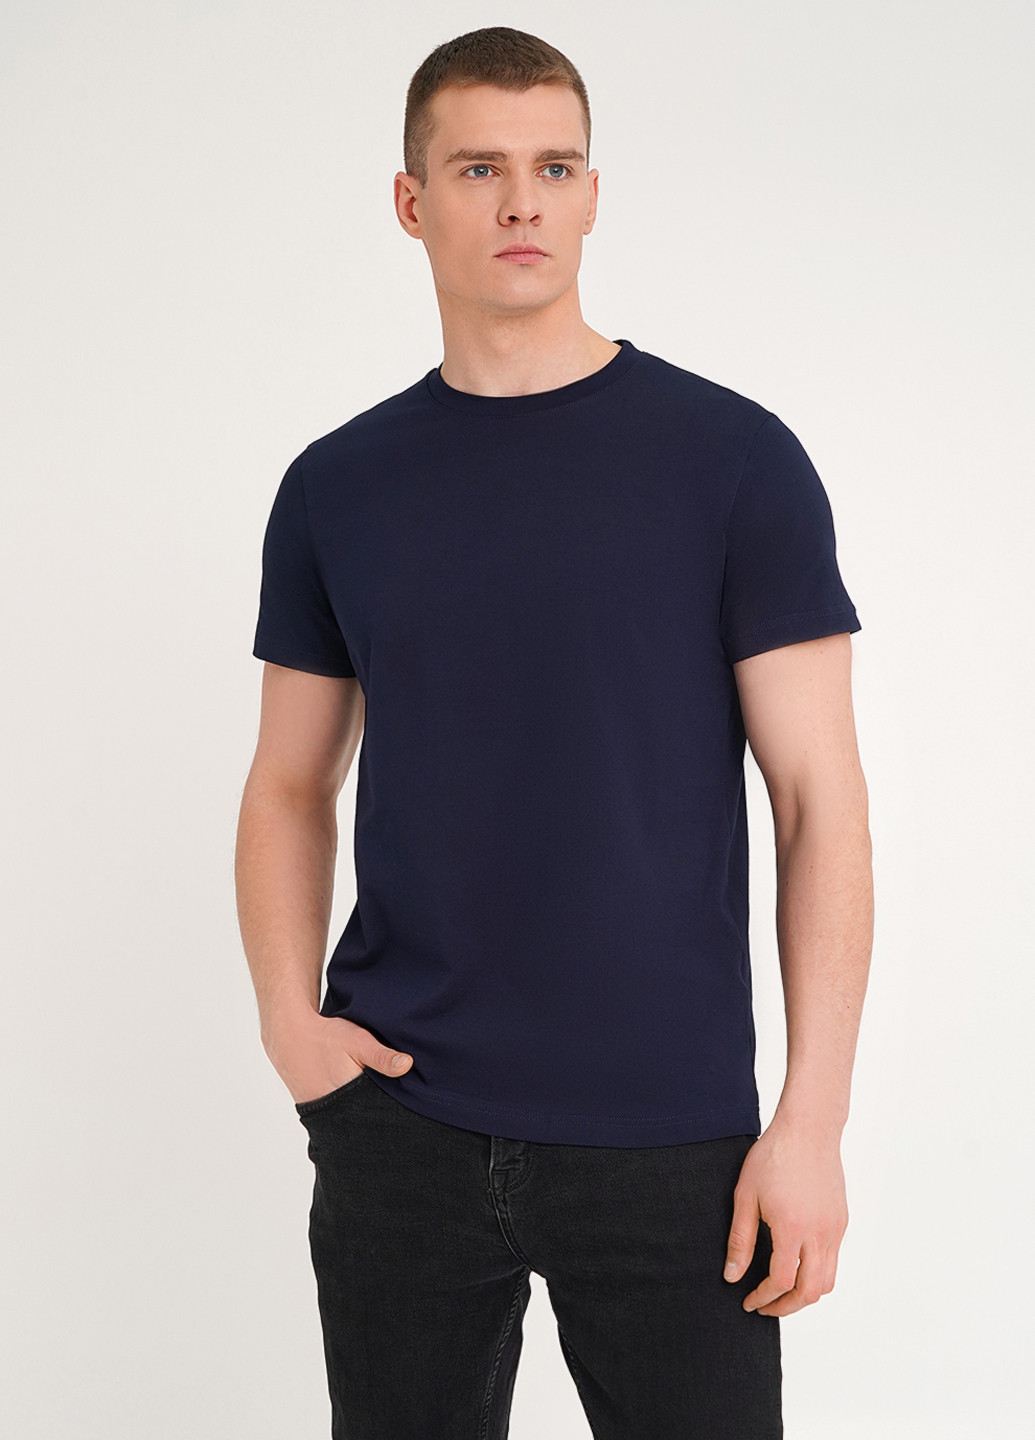 Темно-синяя мужская футболка KASTA design